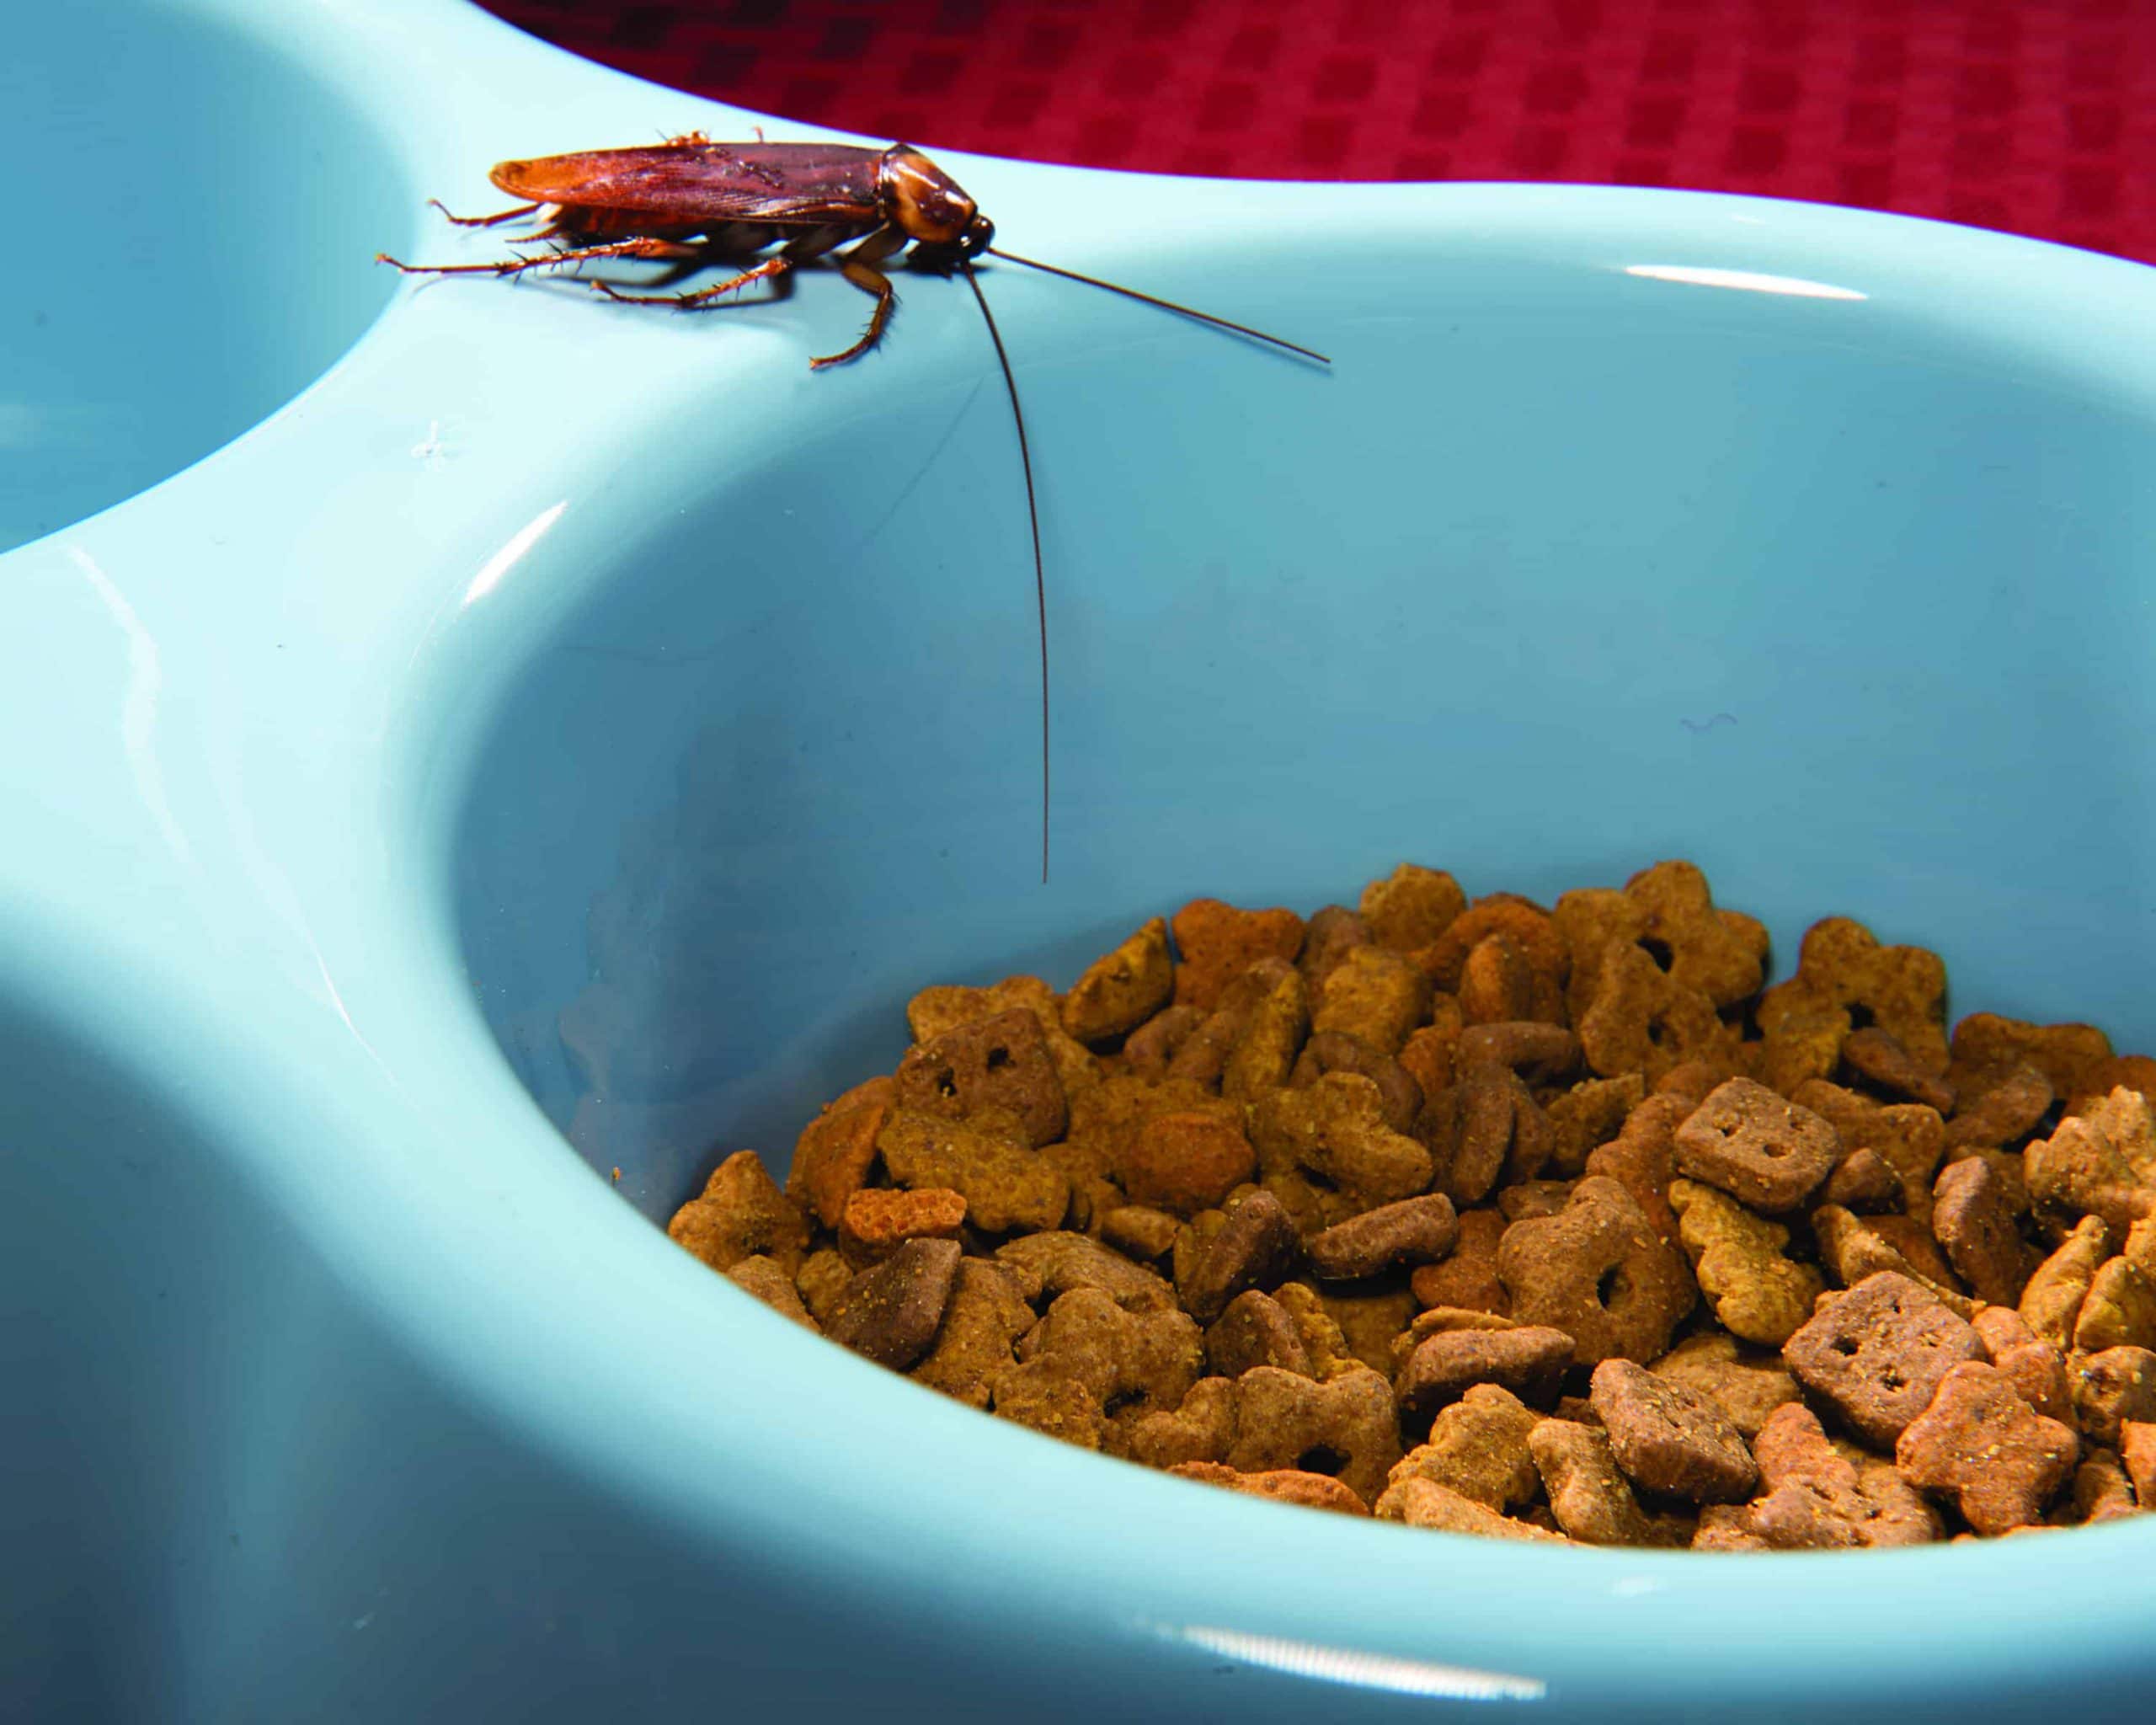 American Cockroach on Dog Dish